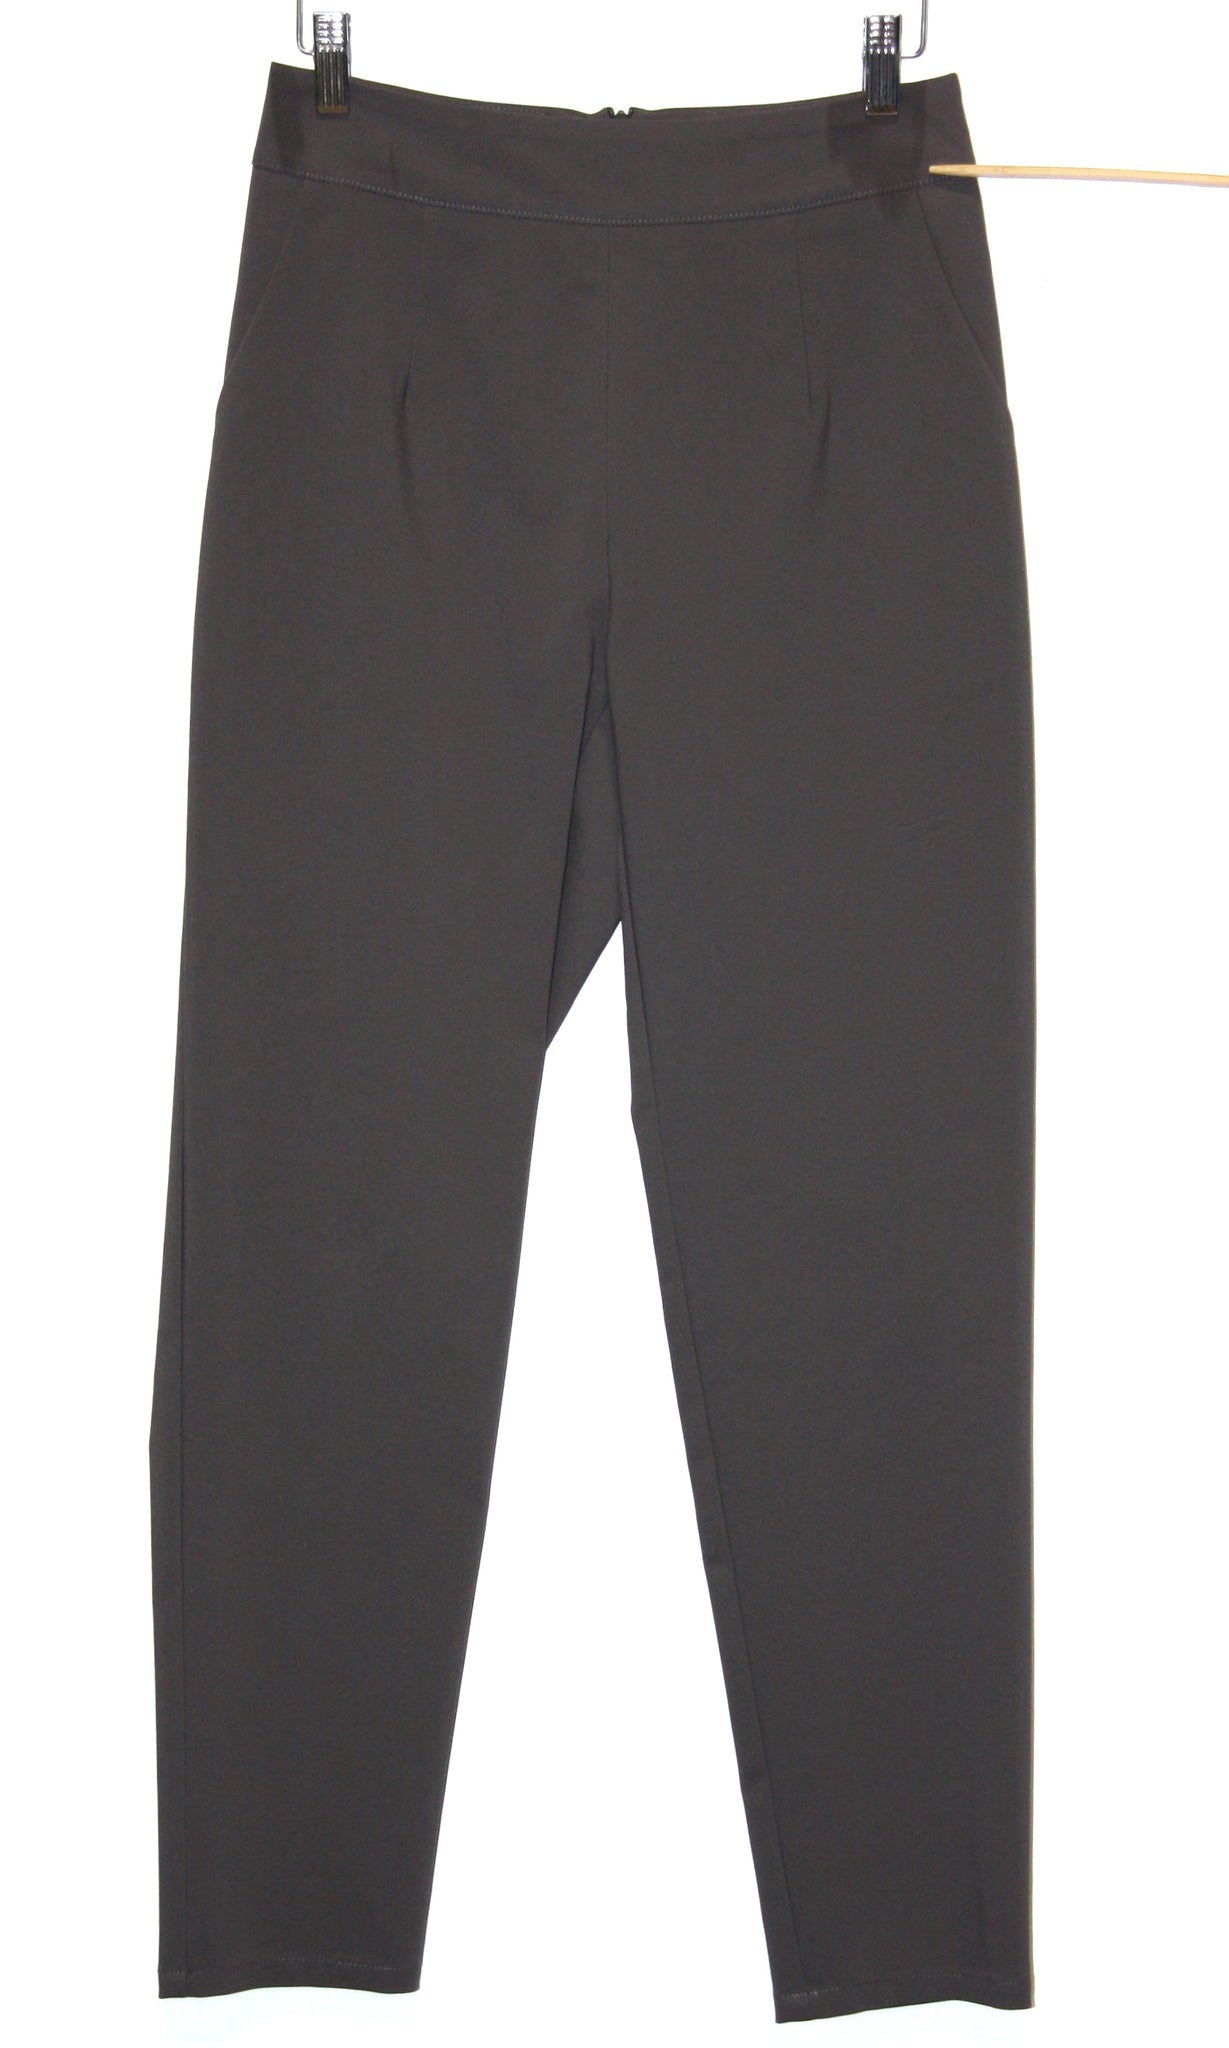 SS67 - 2 - Tern Pant - Grey